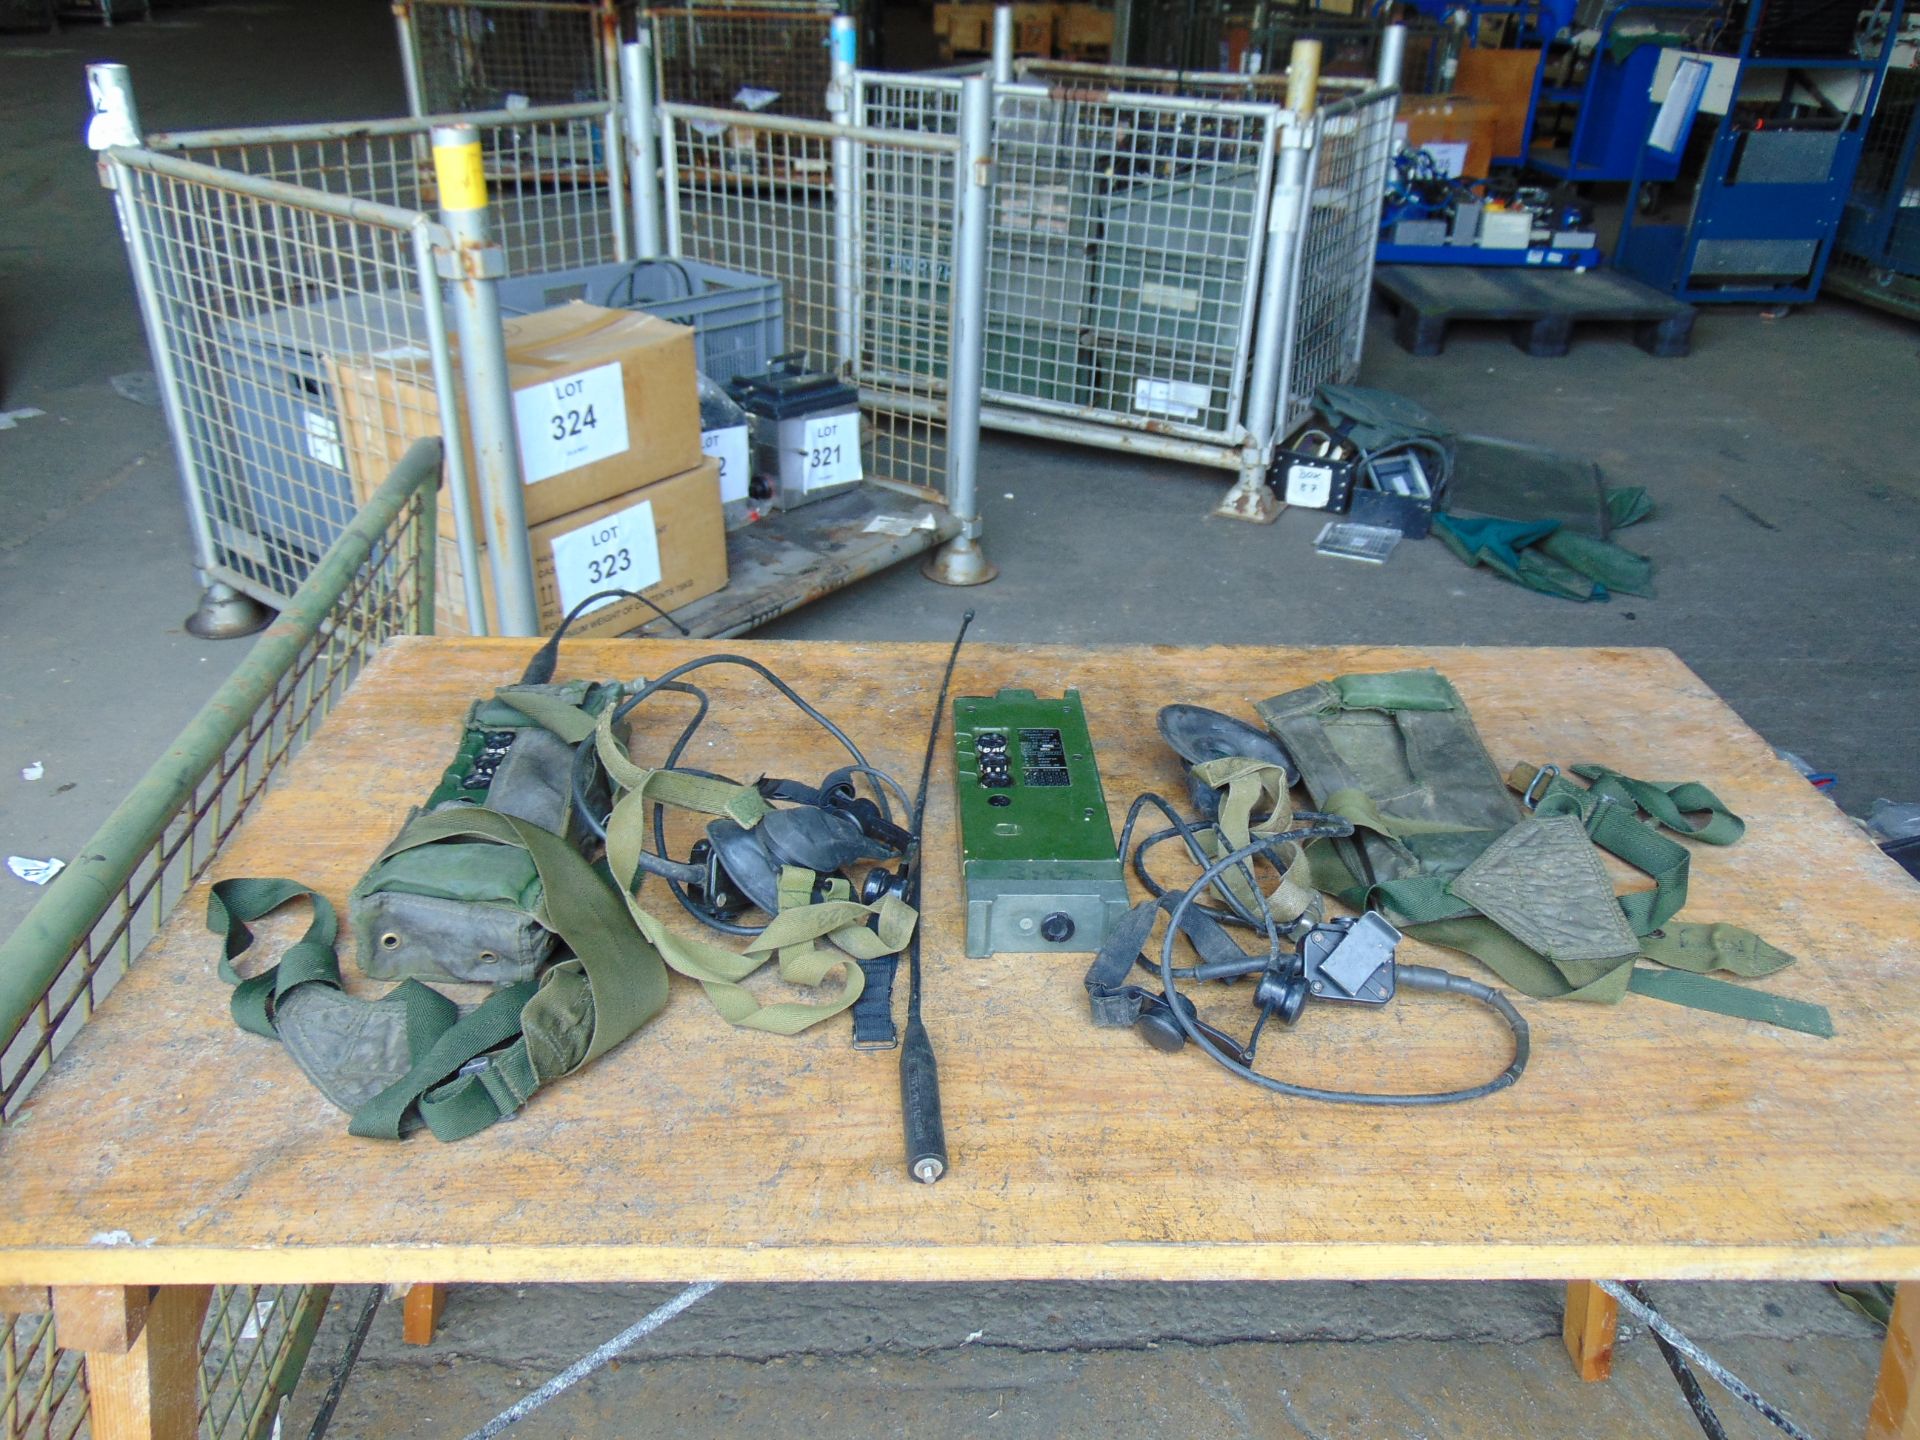 2 x RT 349 British Army Transmitter / Receiver c/w Pouch, Headset, Antenna and Battery Cassette. - Bild 2 aus 5